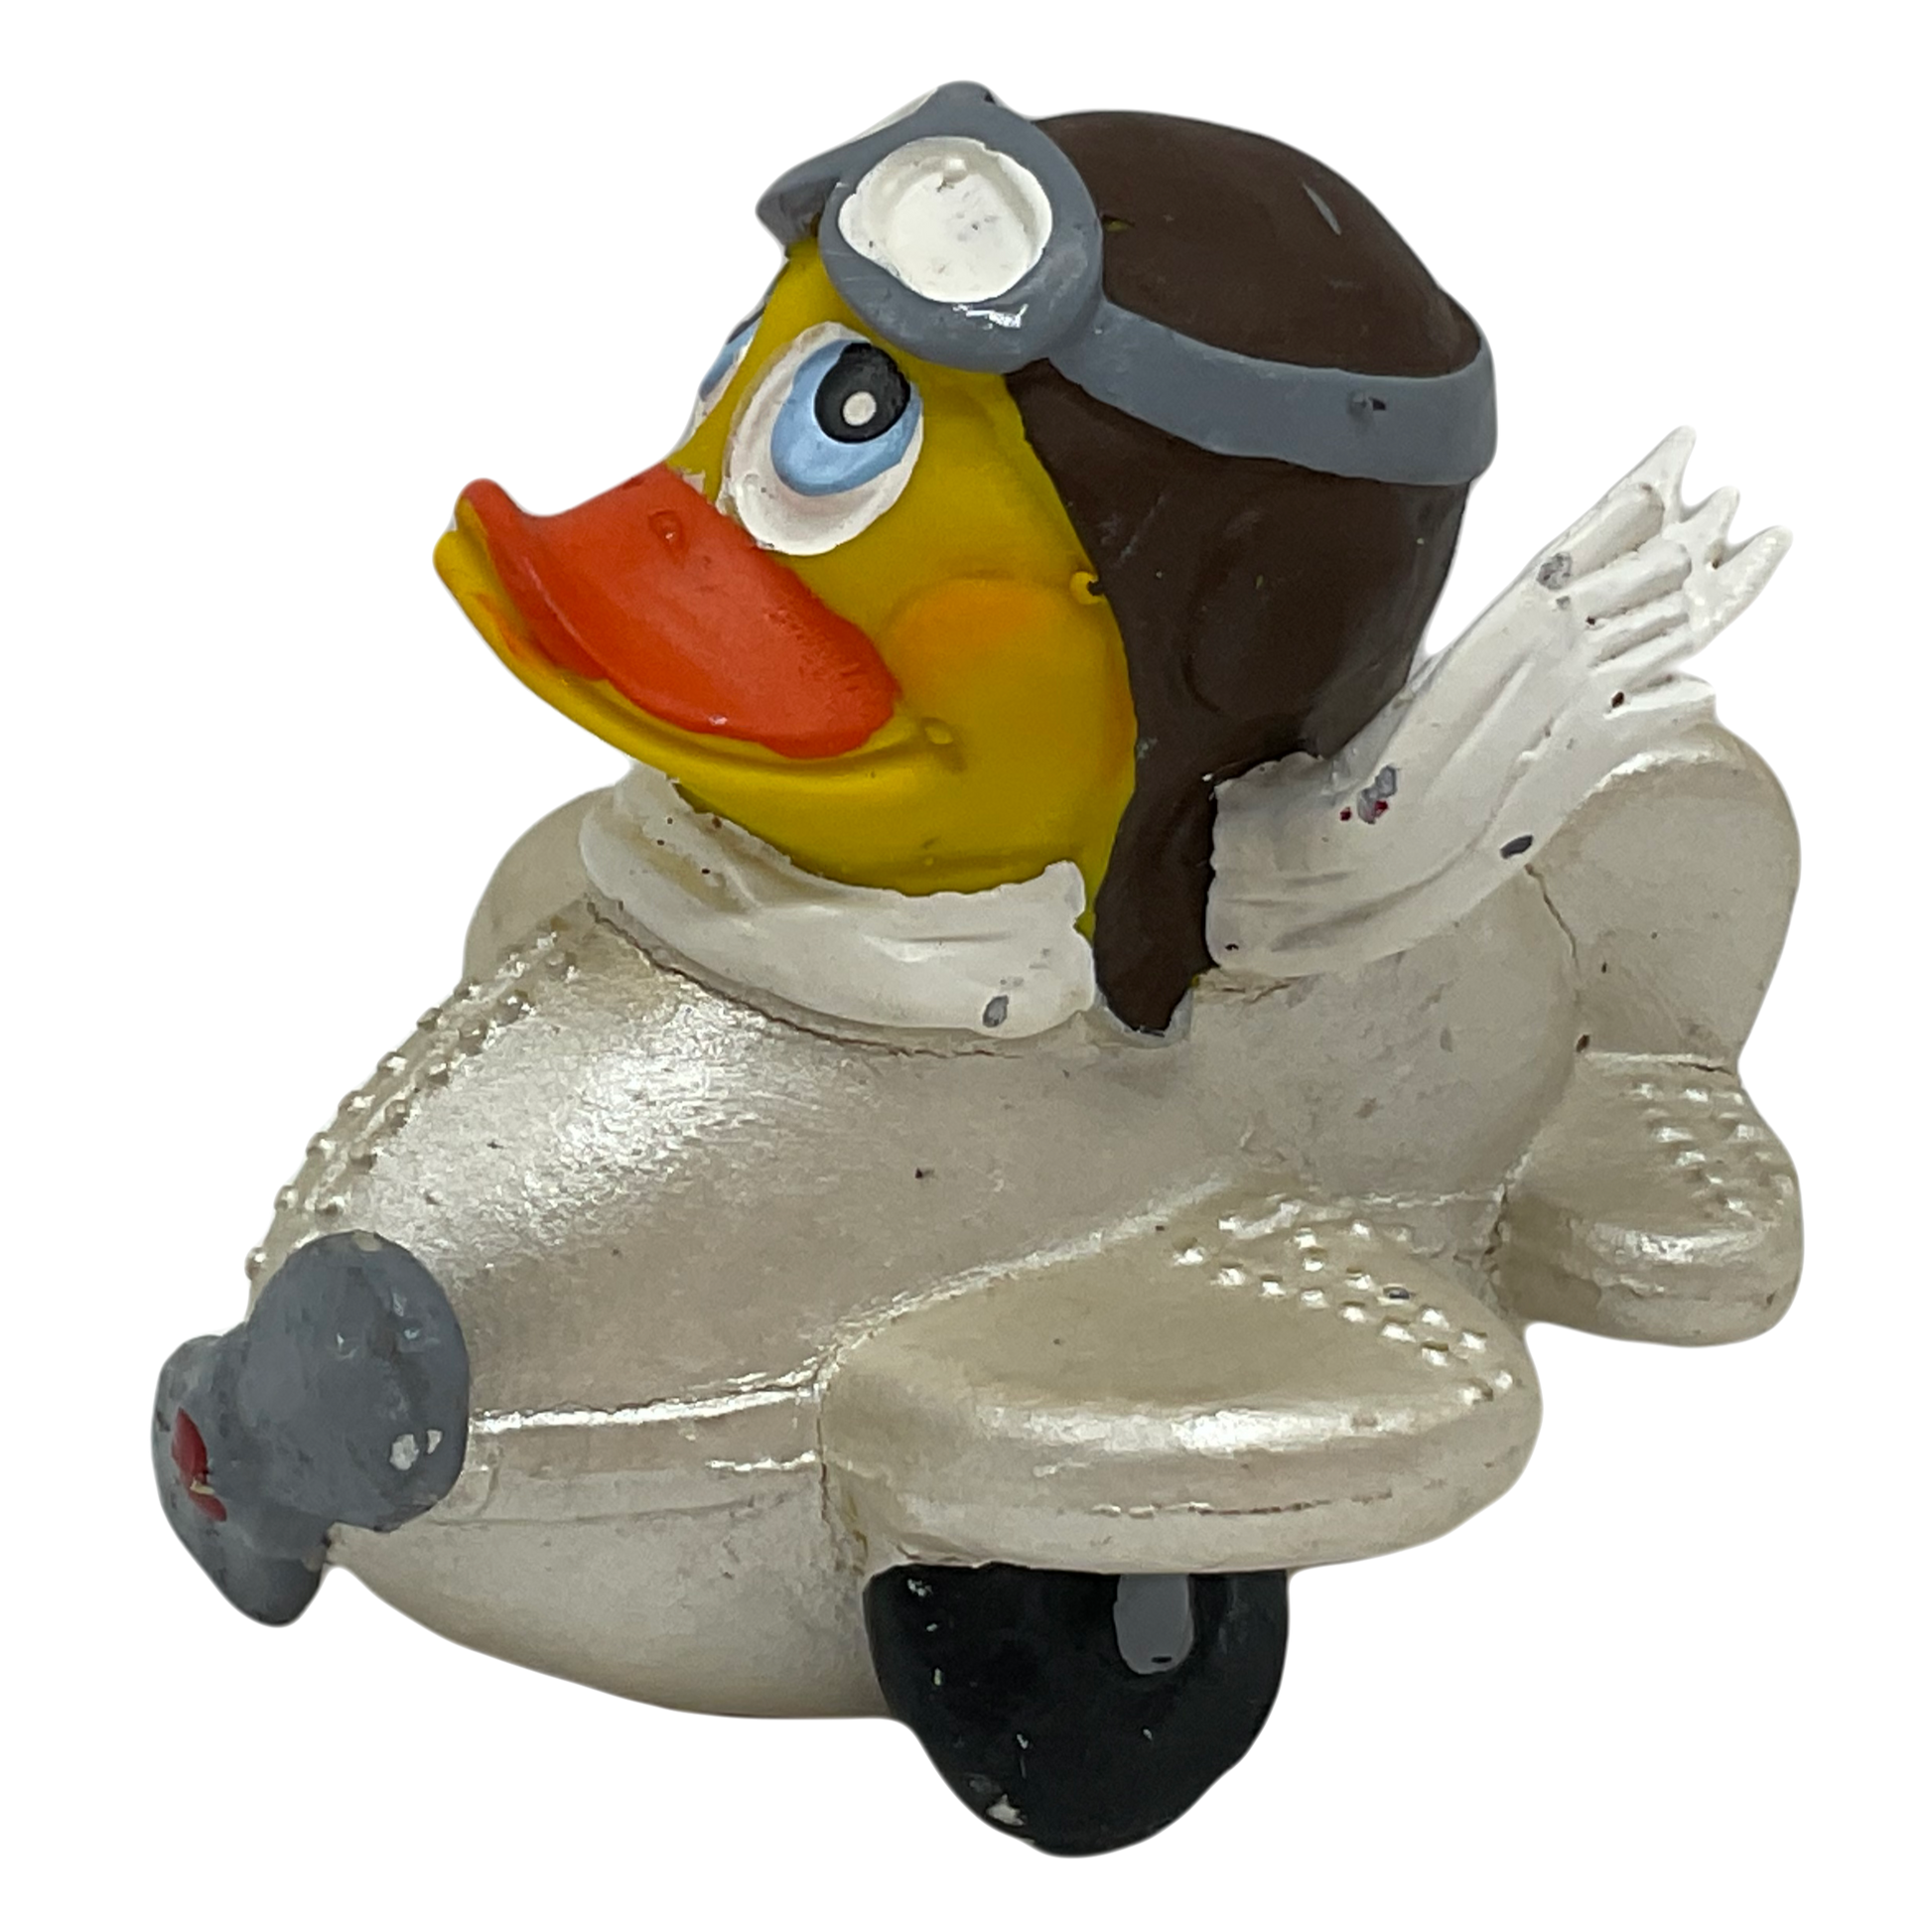 Pilot in Plane Duck 100 % Natural Rubber Duck